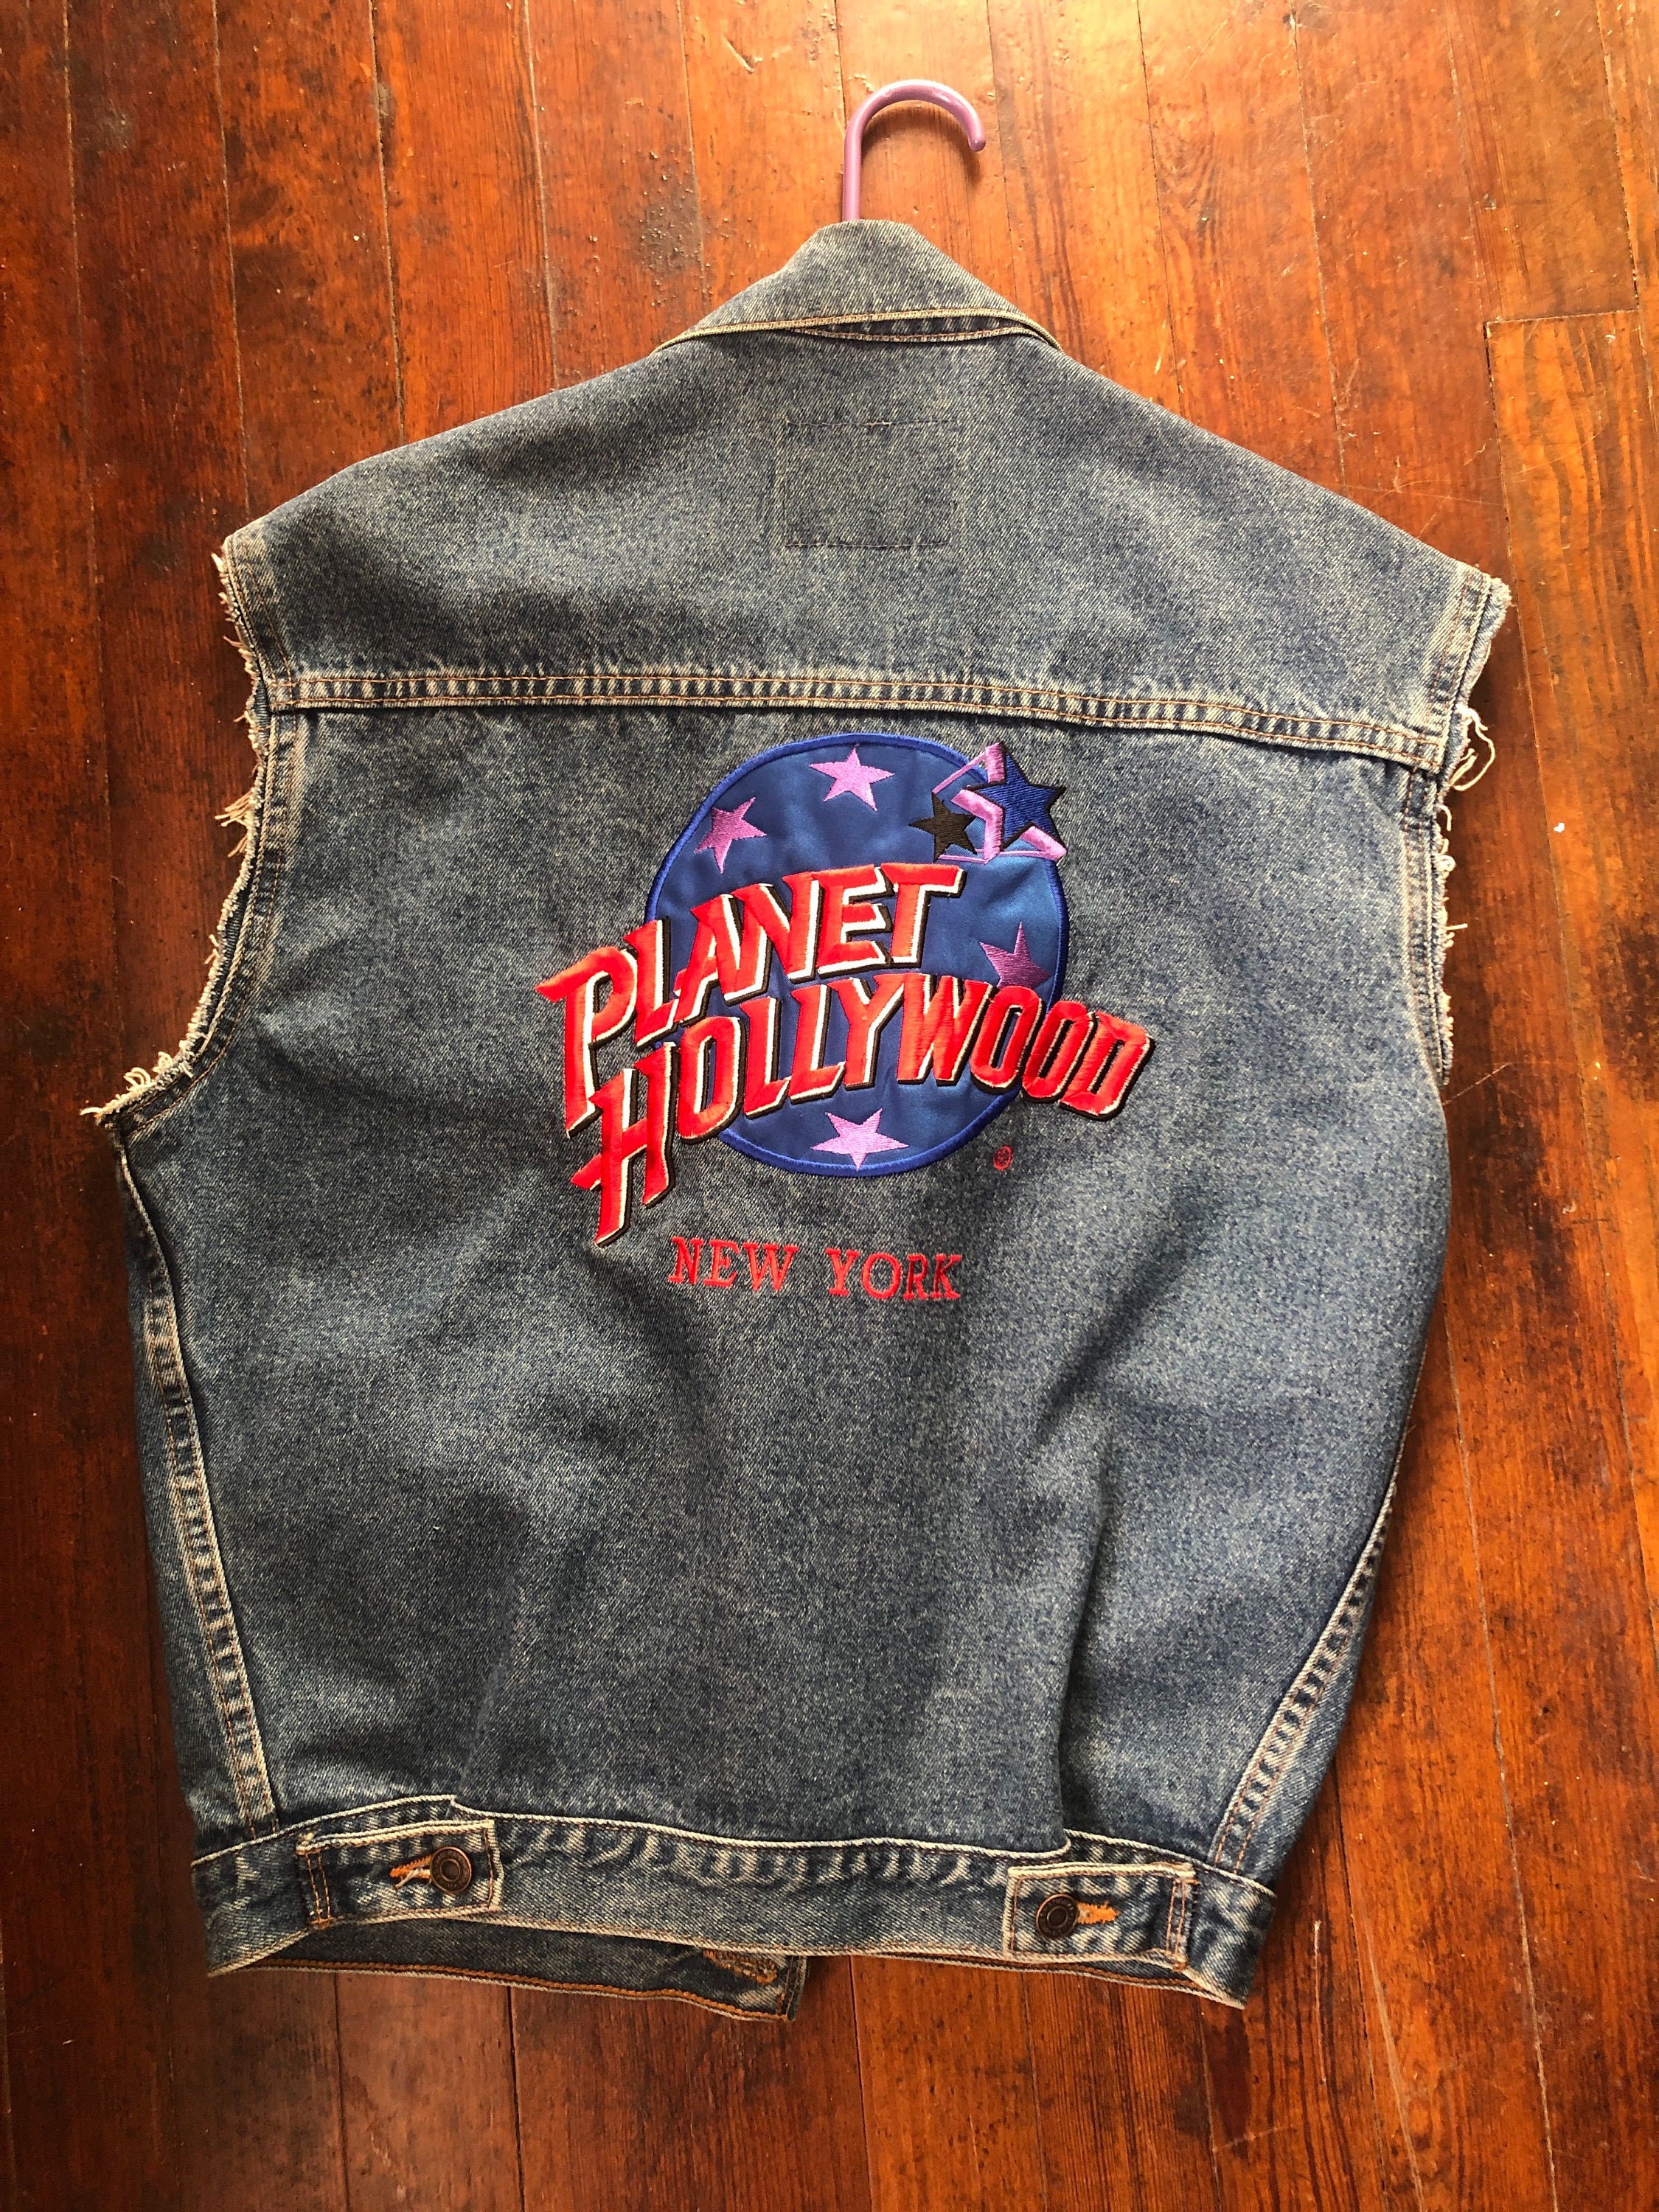 Planet Hollywood Jean Jacket New York Vintage - Etsy